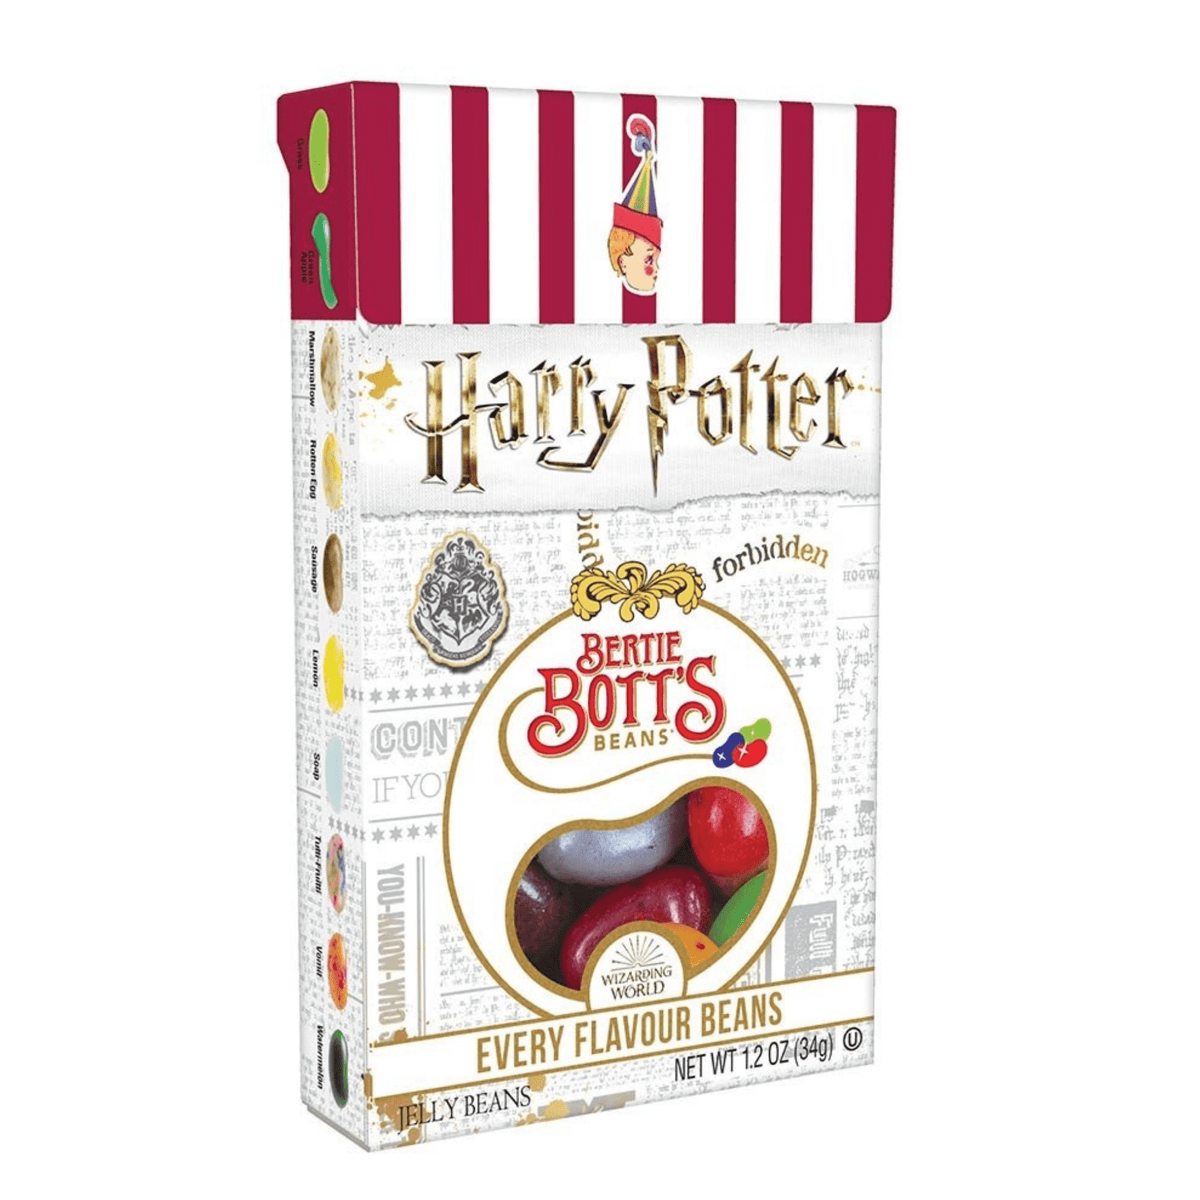 Lolli and Pops Novelty Harry Potter Bertie Botts Beans Box